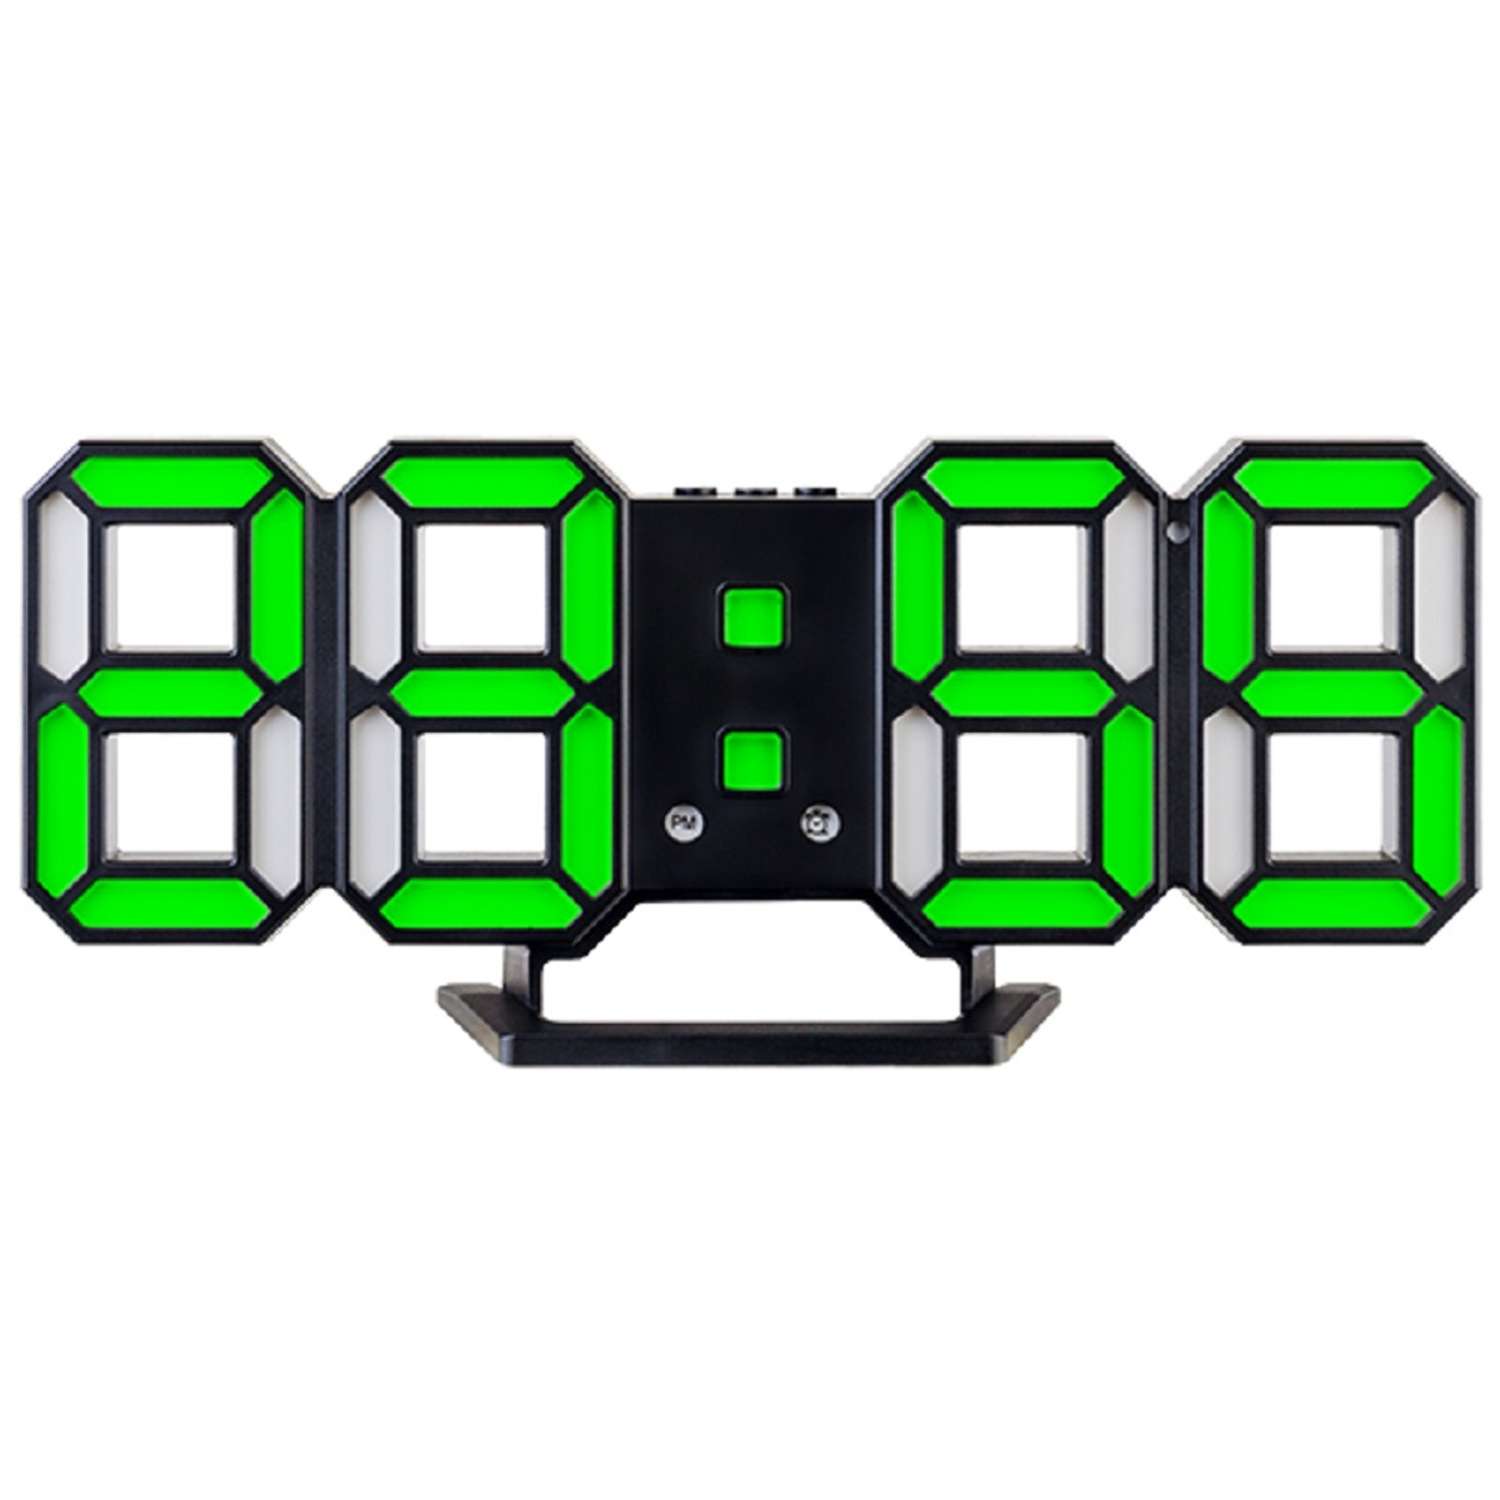 LED часы-будильник Perfeo LUMINOUS 2 черный корпус зелёная подсветка PF-6111 - фото 2